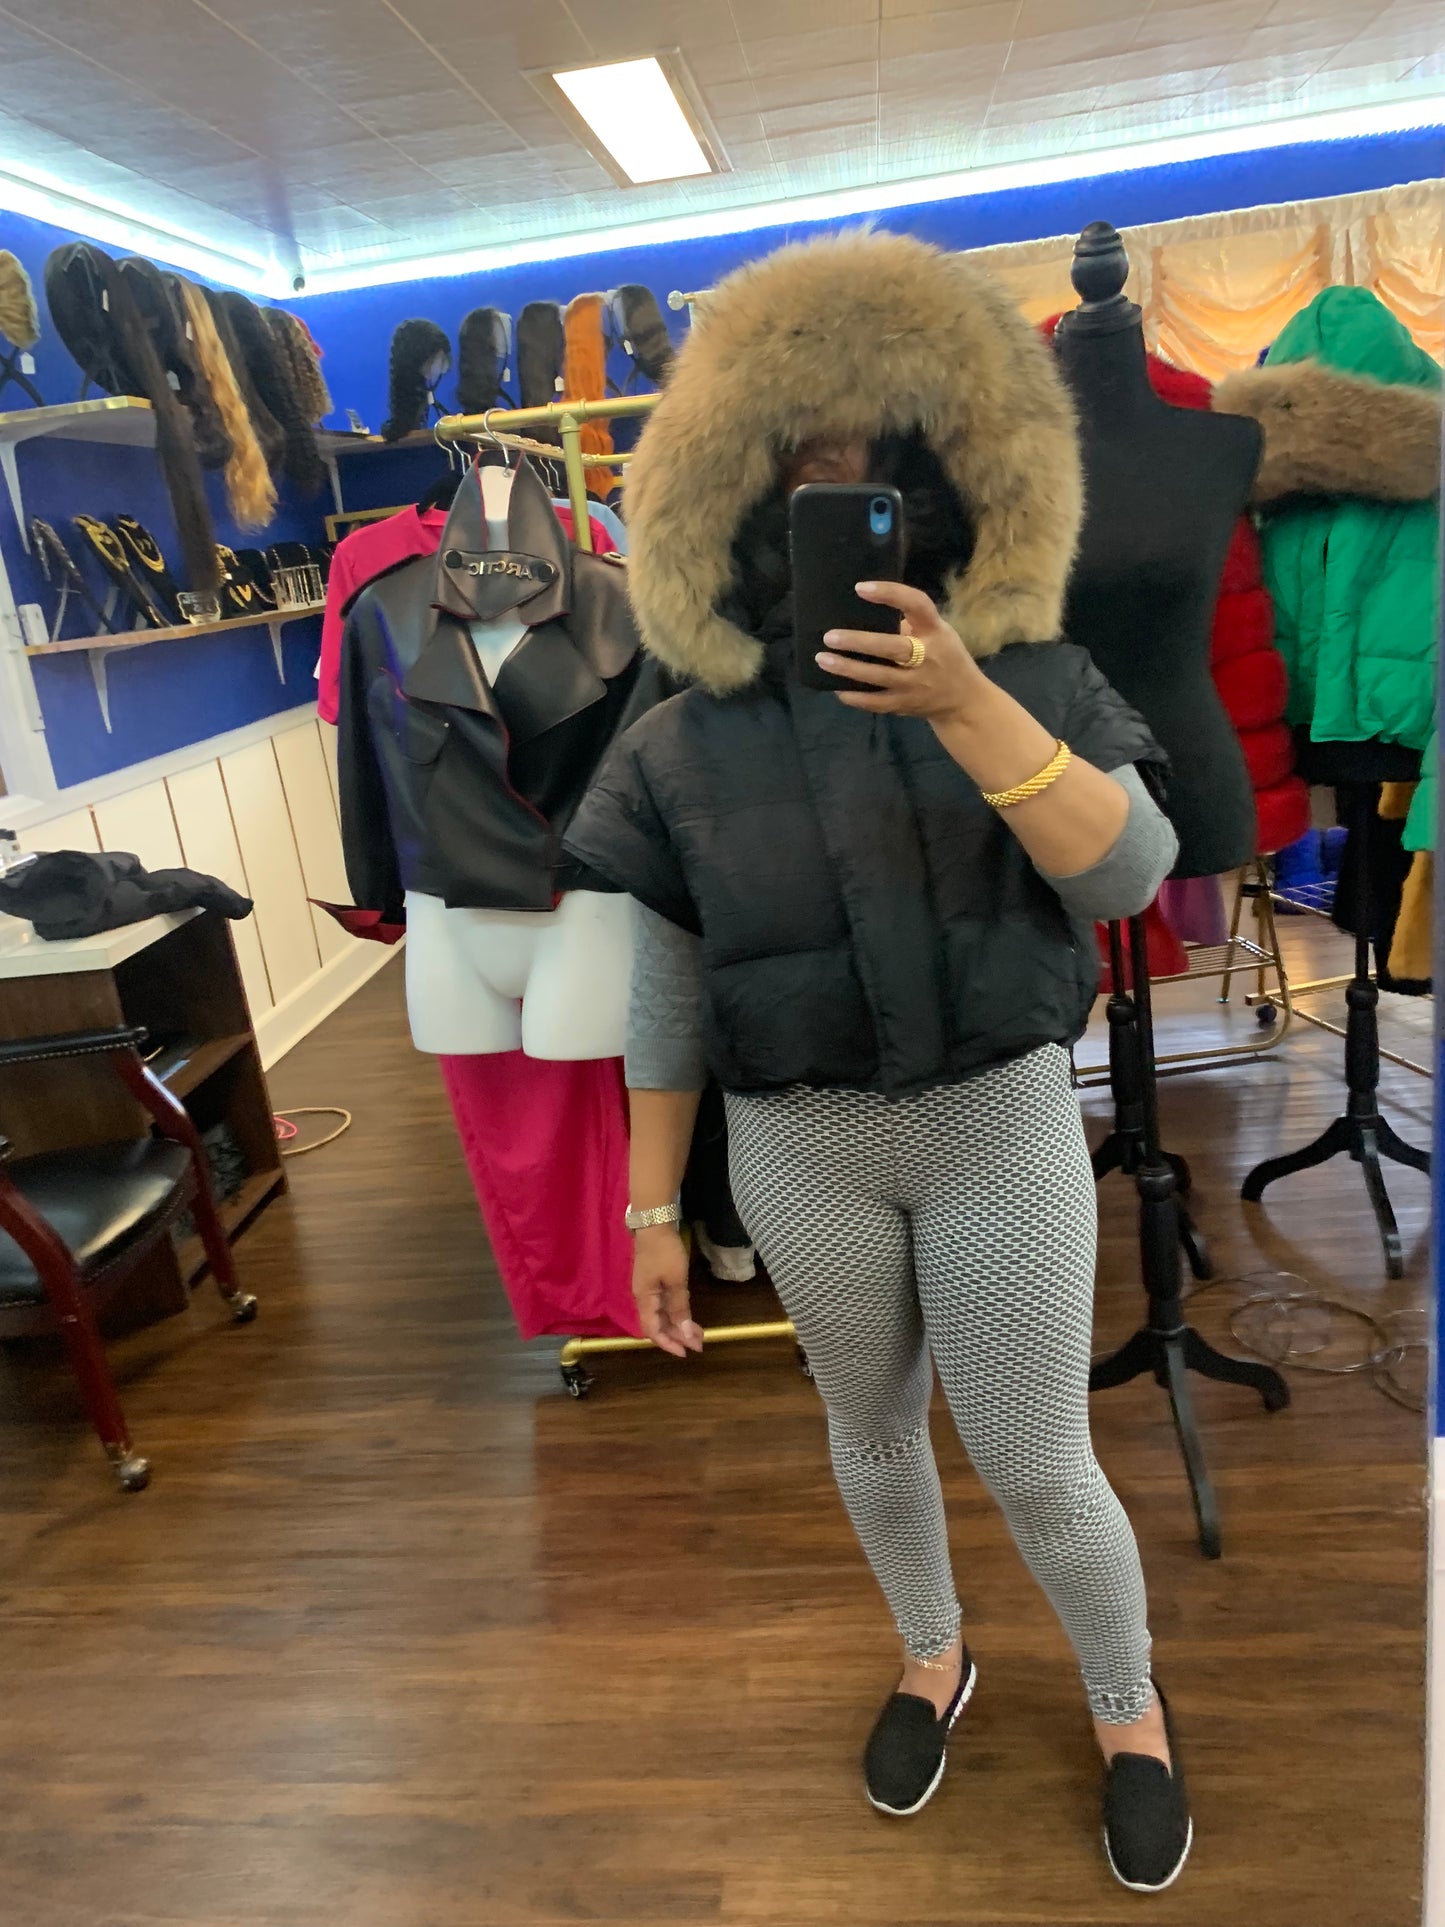 Fur hood coat.